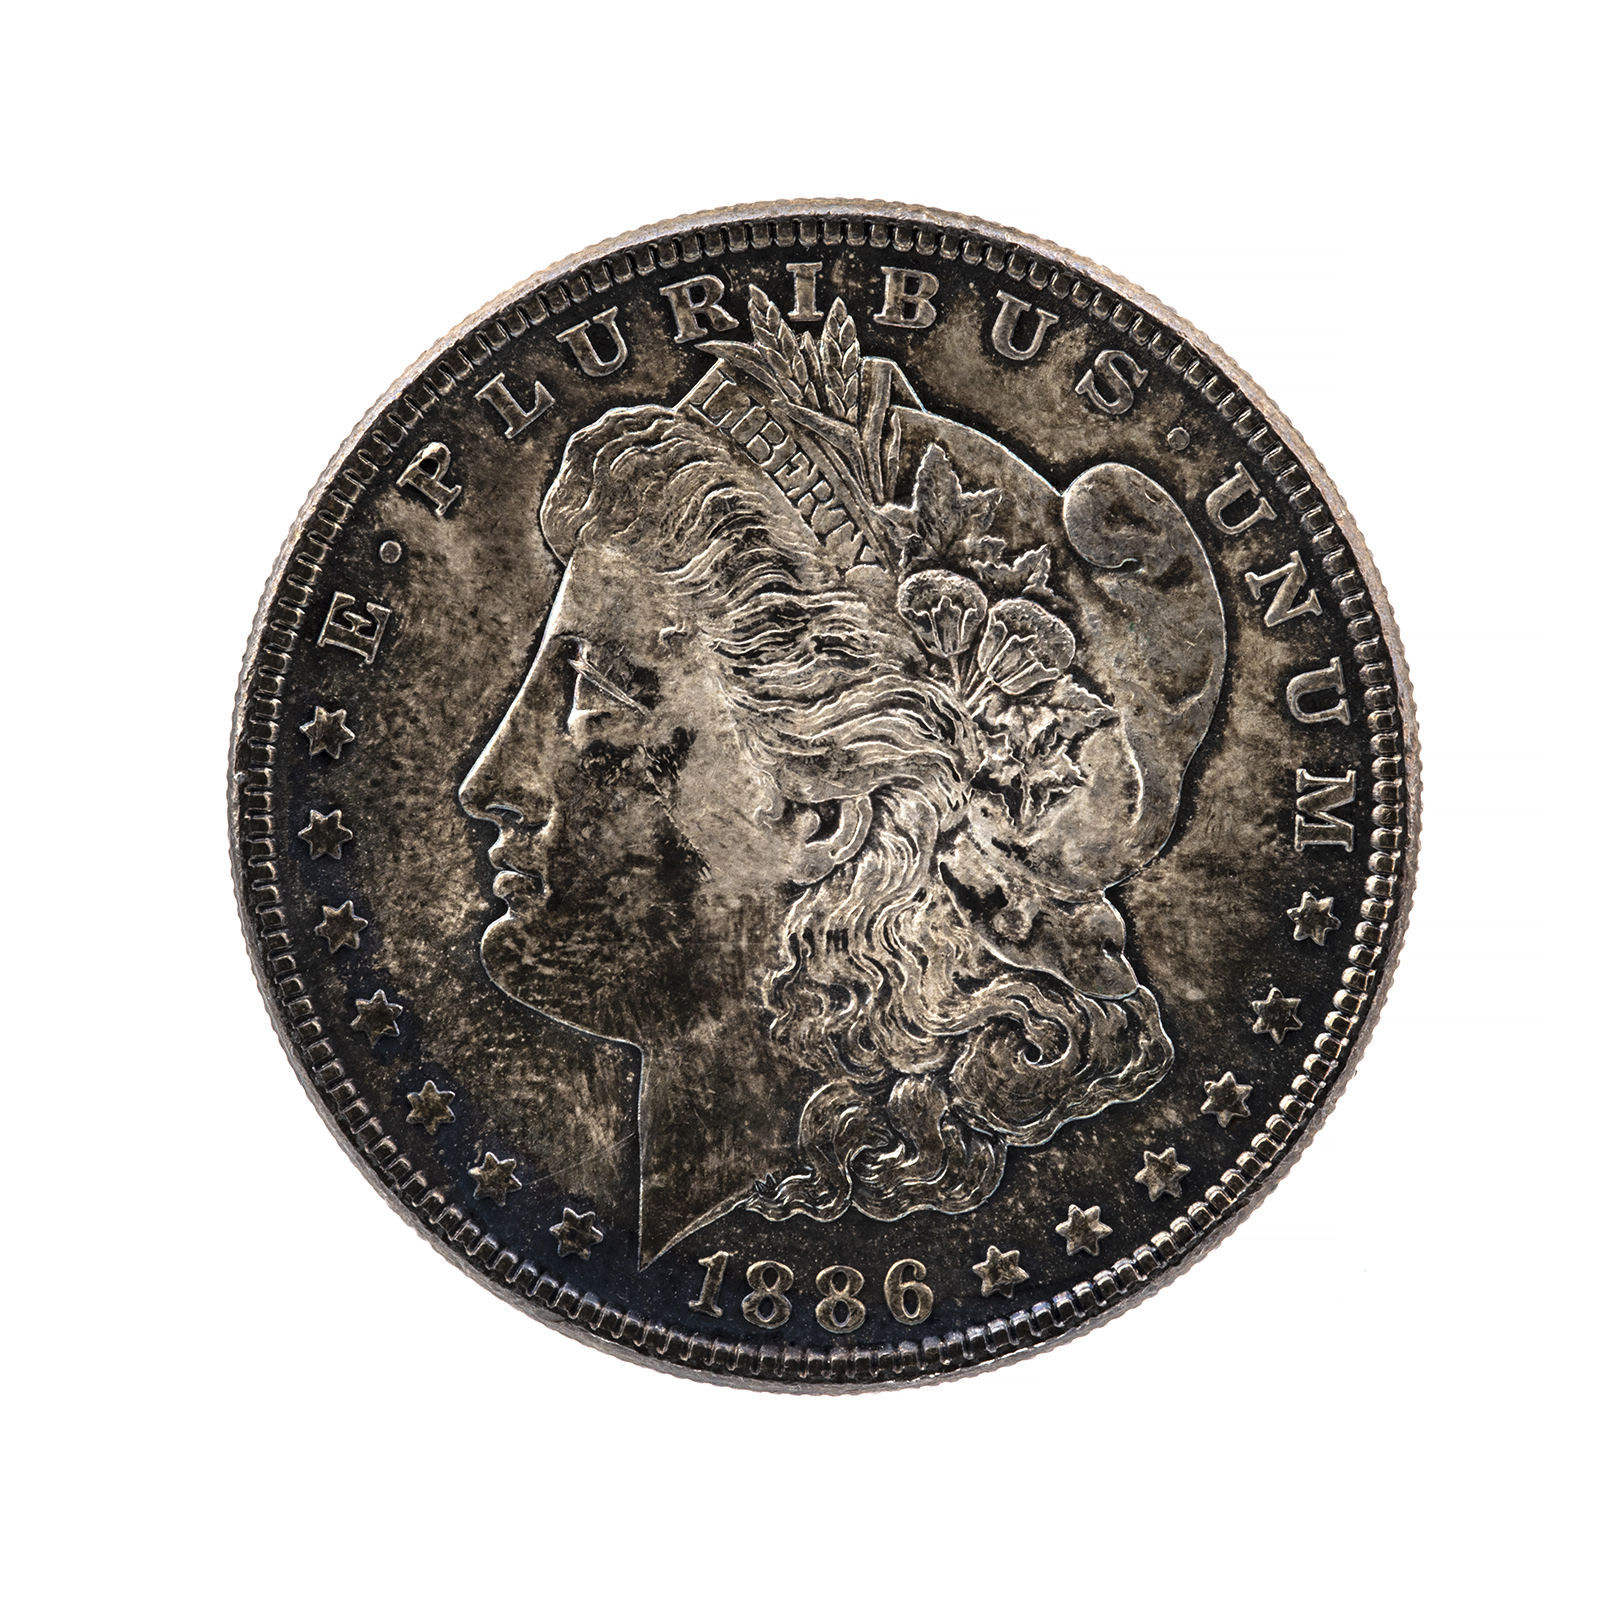 Morgan silver dollar 1868